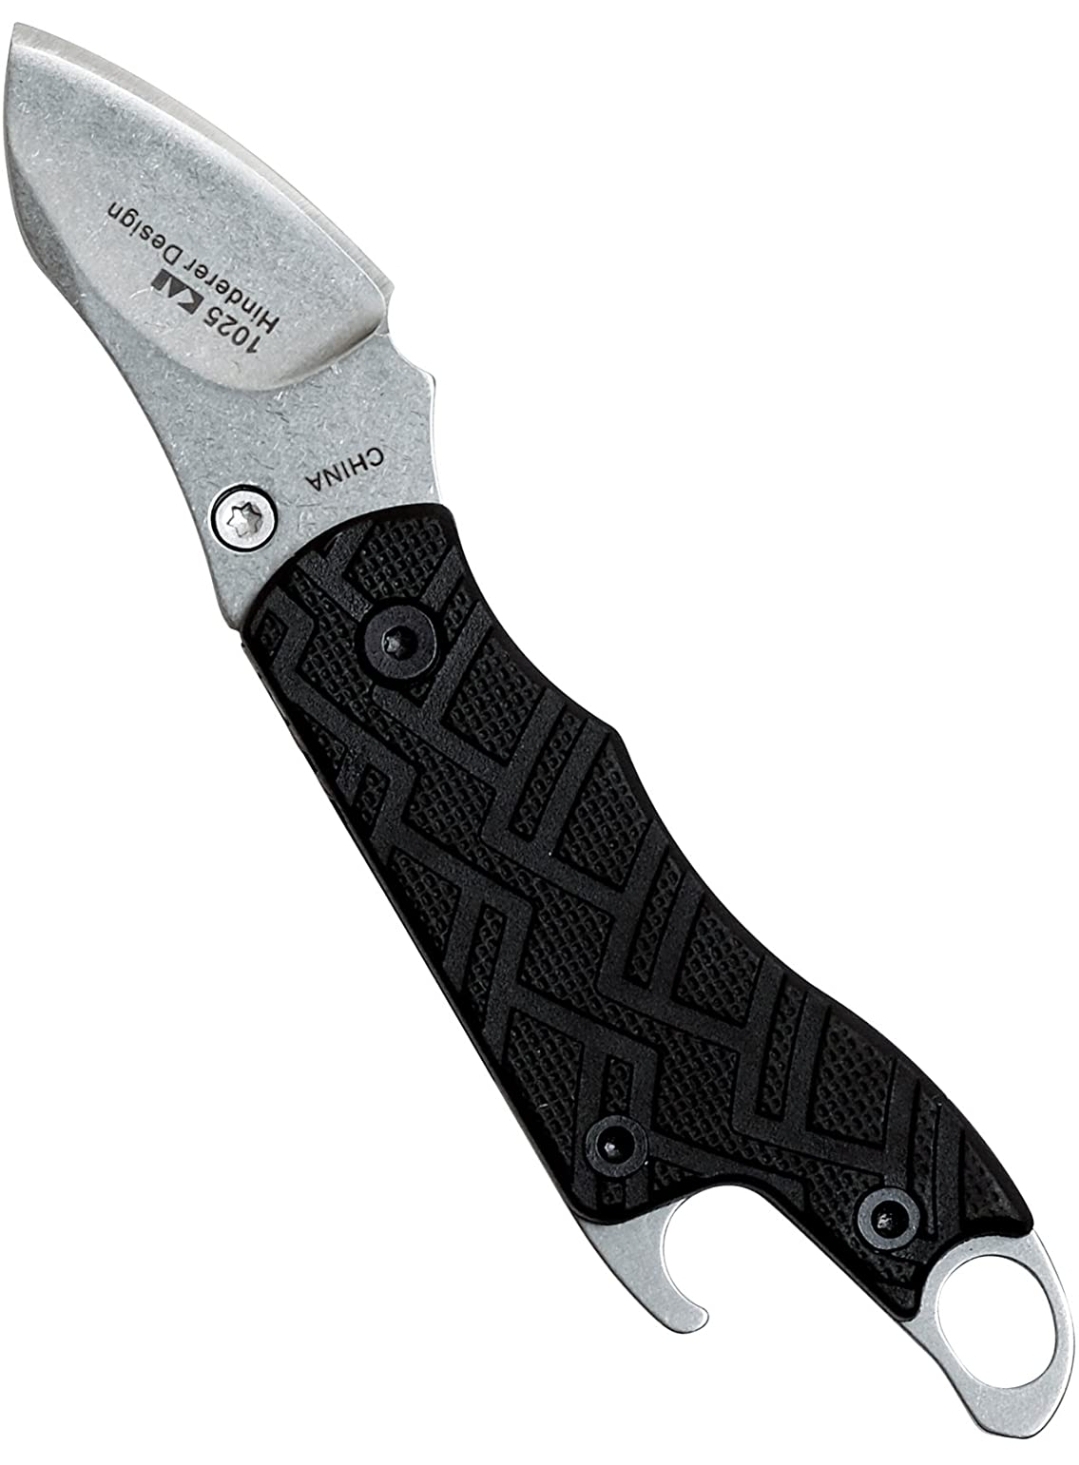 Kershaw Cinder Multi-Function Folding Pocketknife $7.21